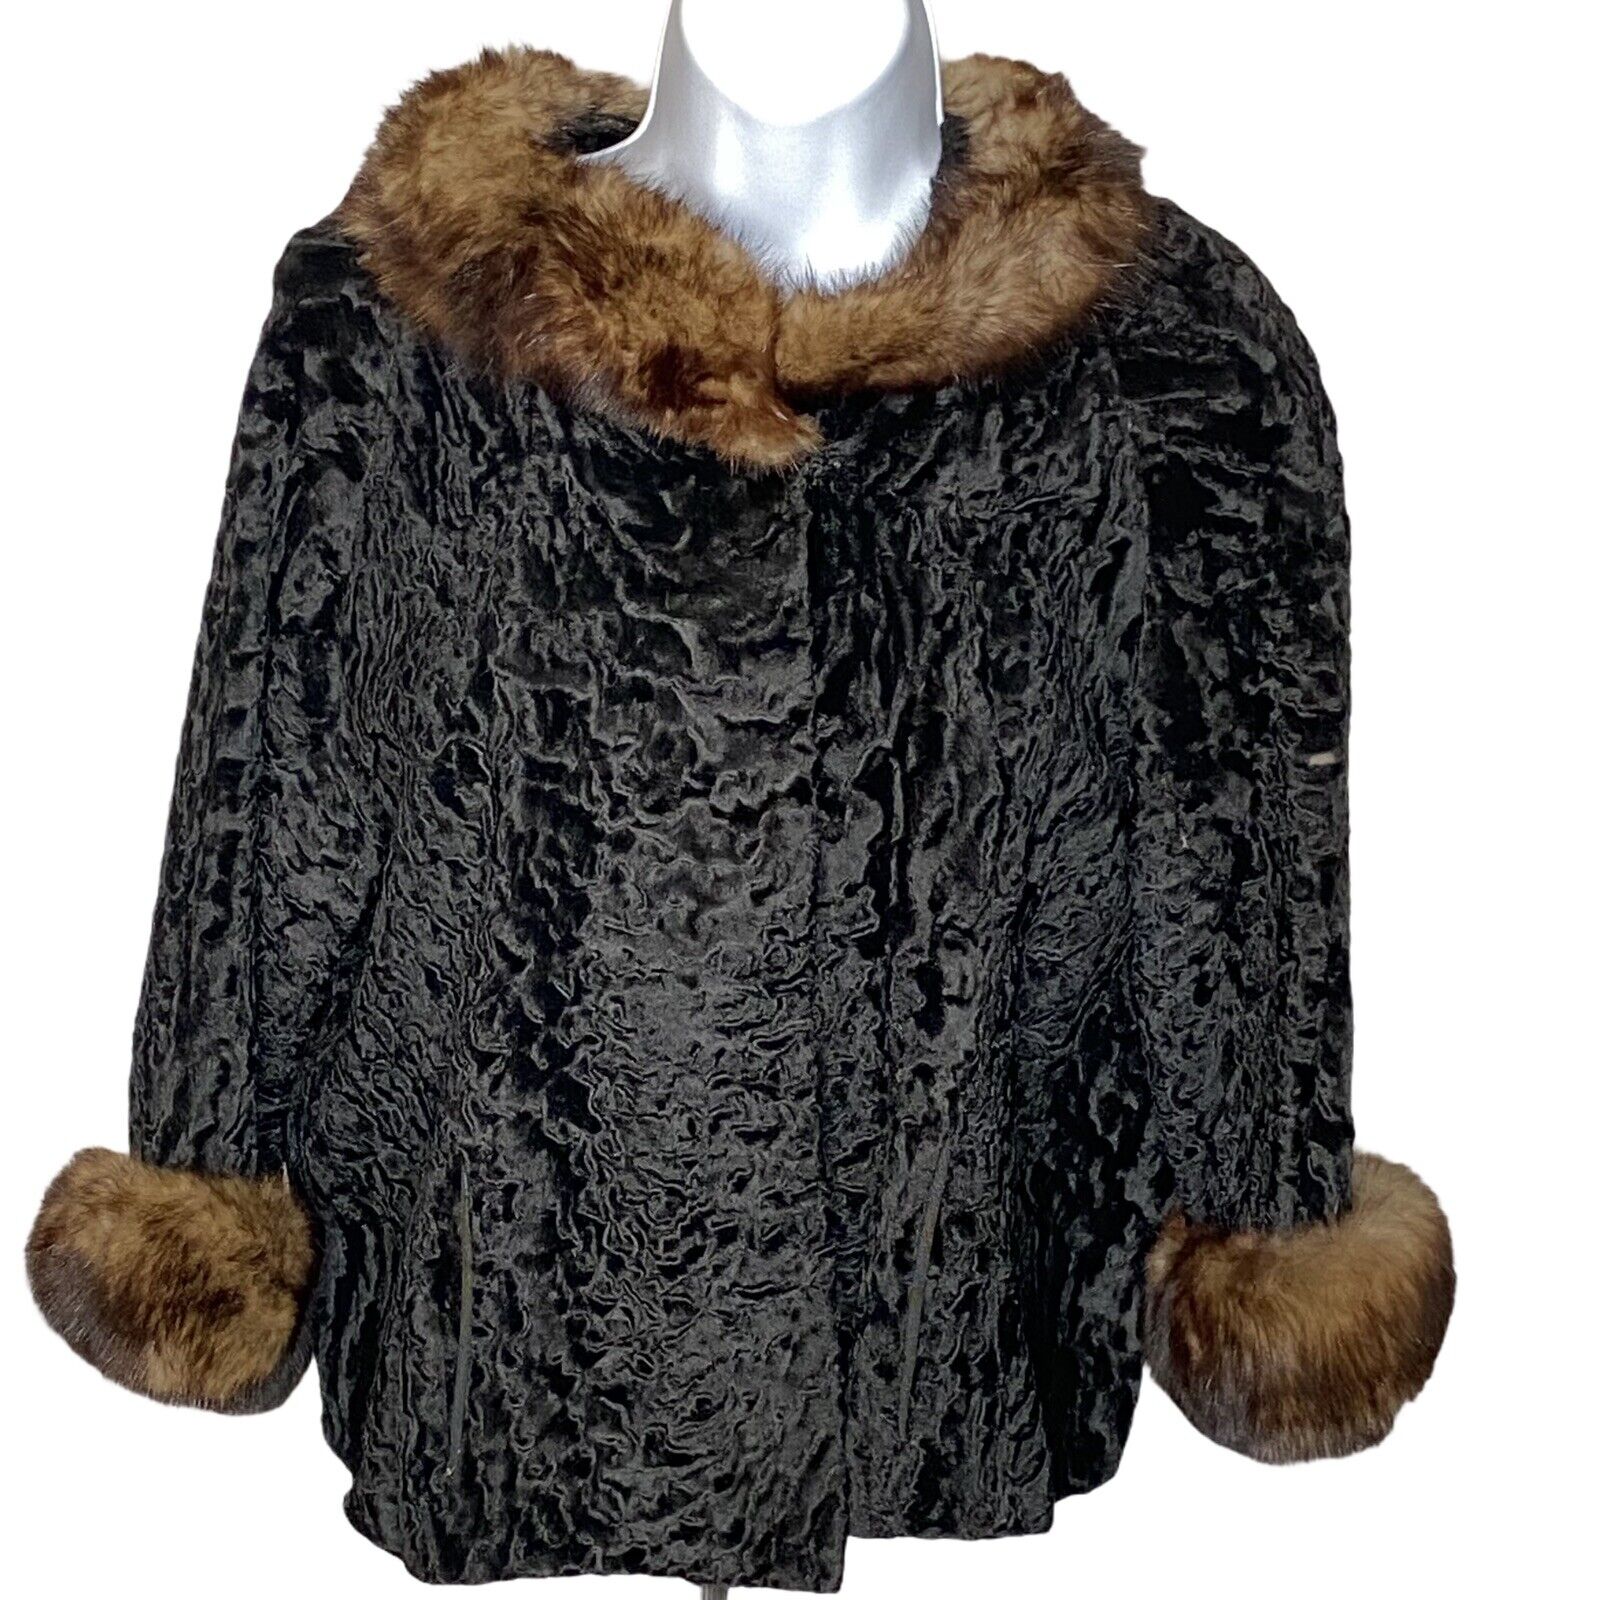 Vintage Black Persian Curly Lamb Brown Mink Trim Fur Jacket Small Short 50s Standardowa sprzedaż wysyłkowa